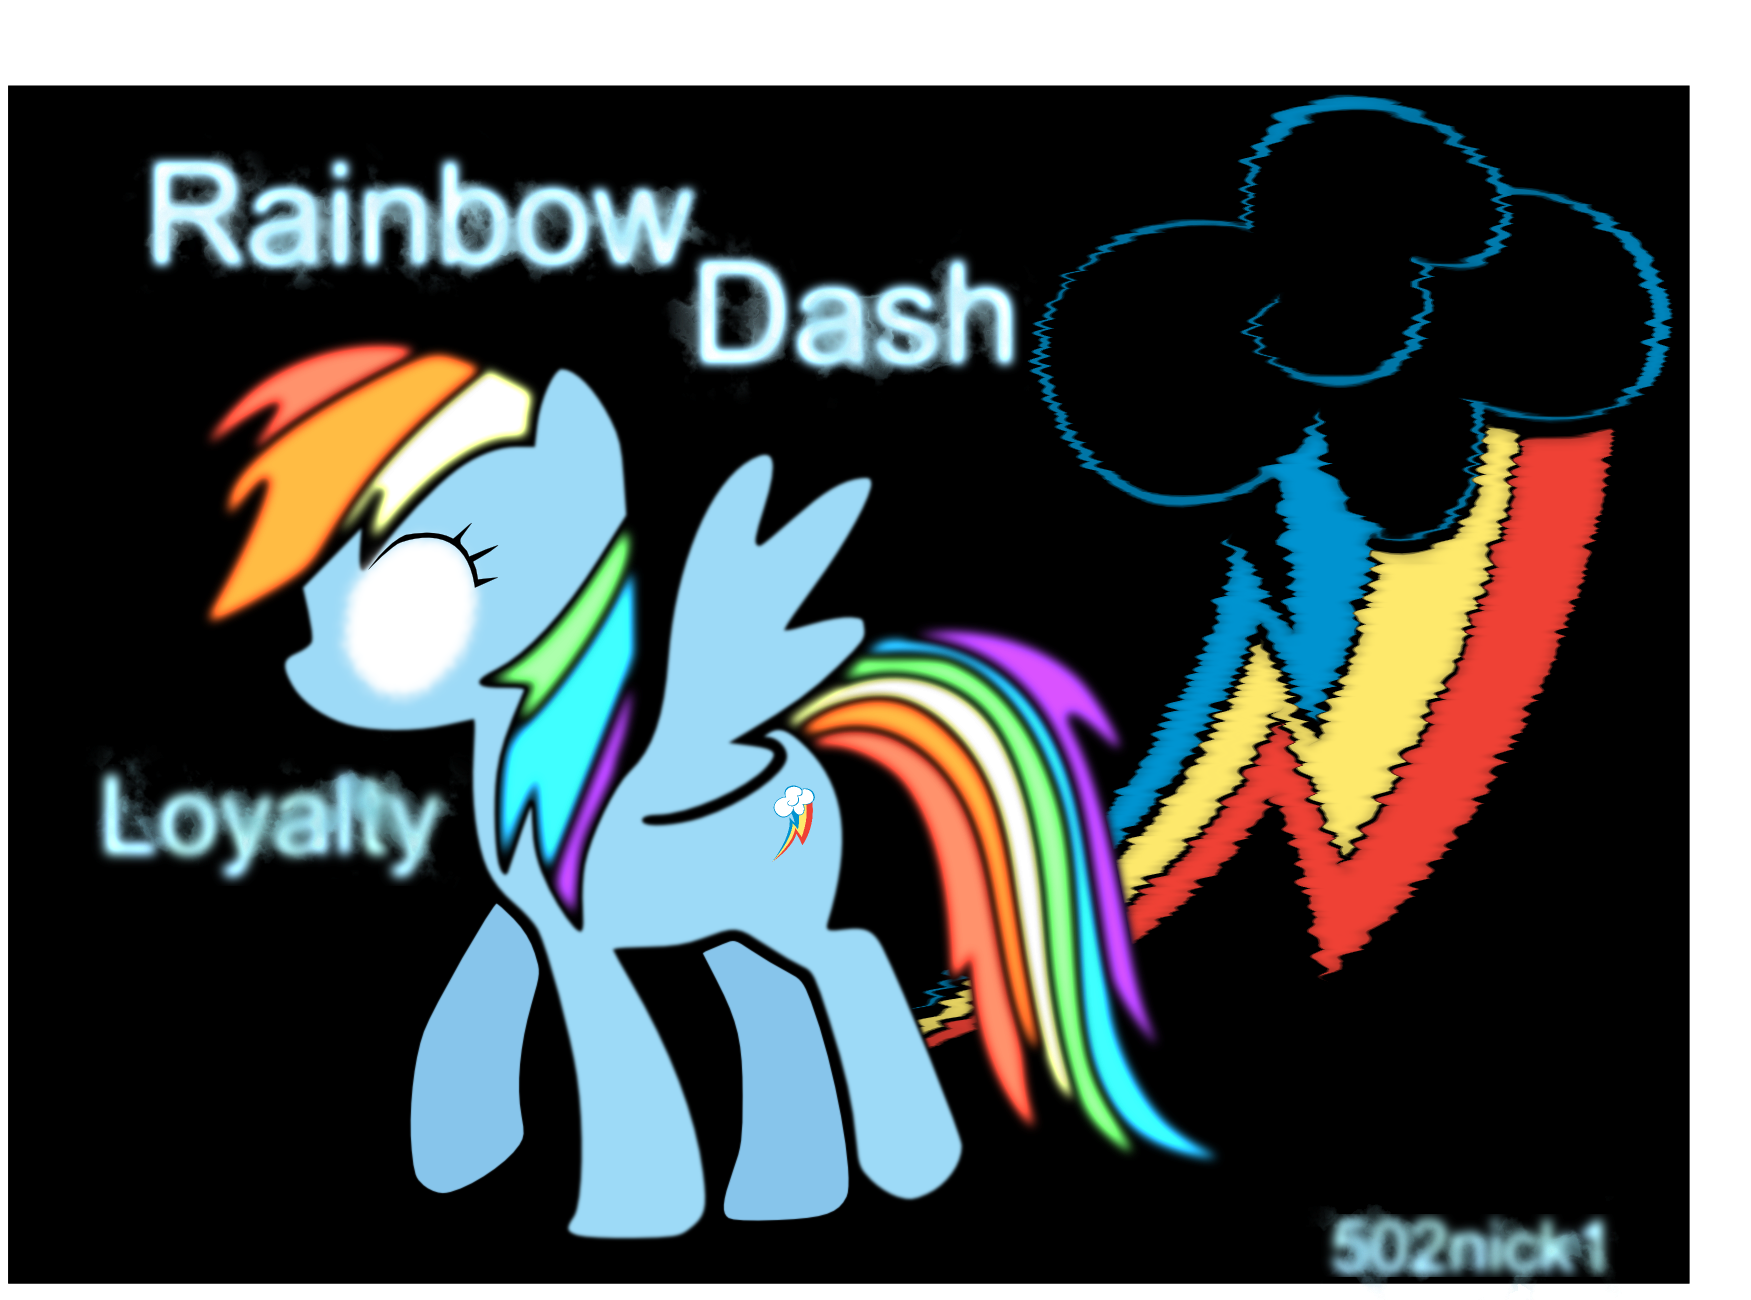 Rainbow Dash Wallpaper HD By 502nick1